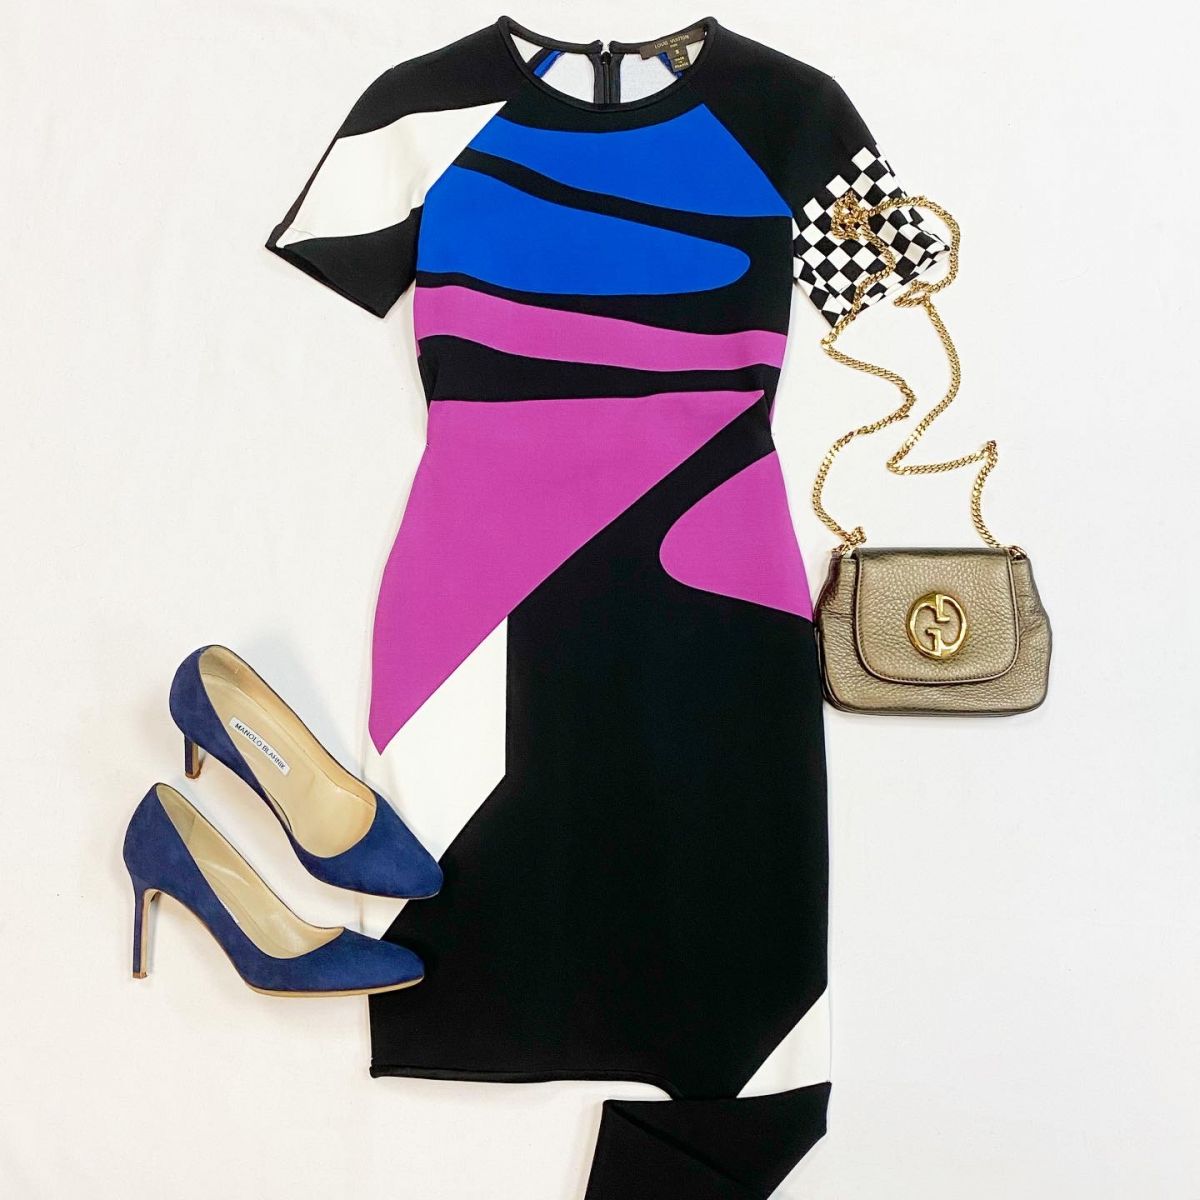 Платье Louis Vuitton размер S цена 30 770 рубТуфли Manolo Blahnik размер 38 цена 9 231 рубСумка Gucci